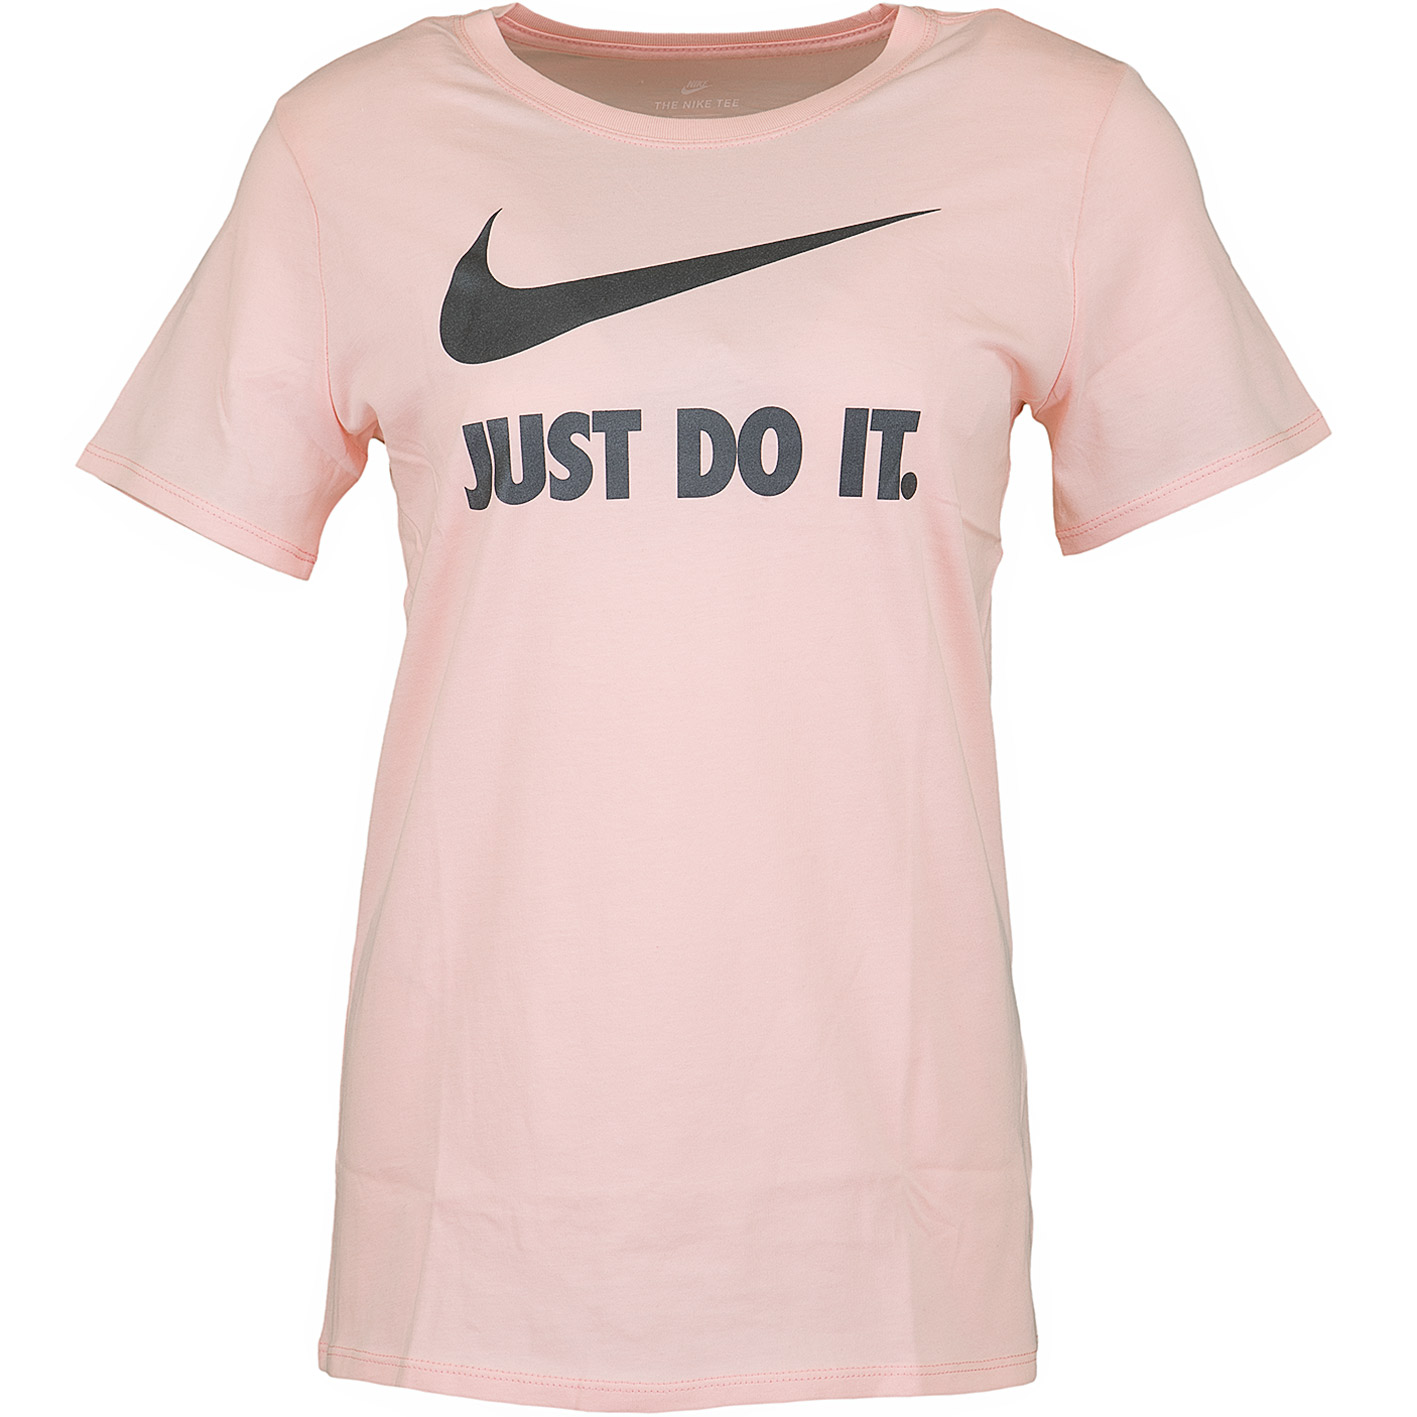 ☆ Nike Damen T-Shirt Just Do It Swoosh pink/schwarz - hier bestellen!